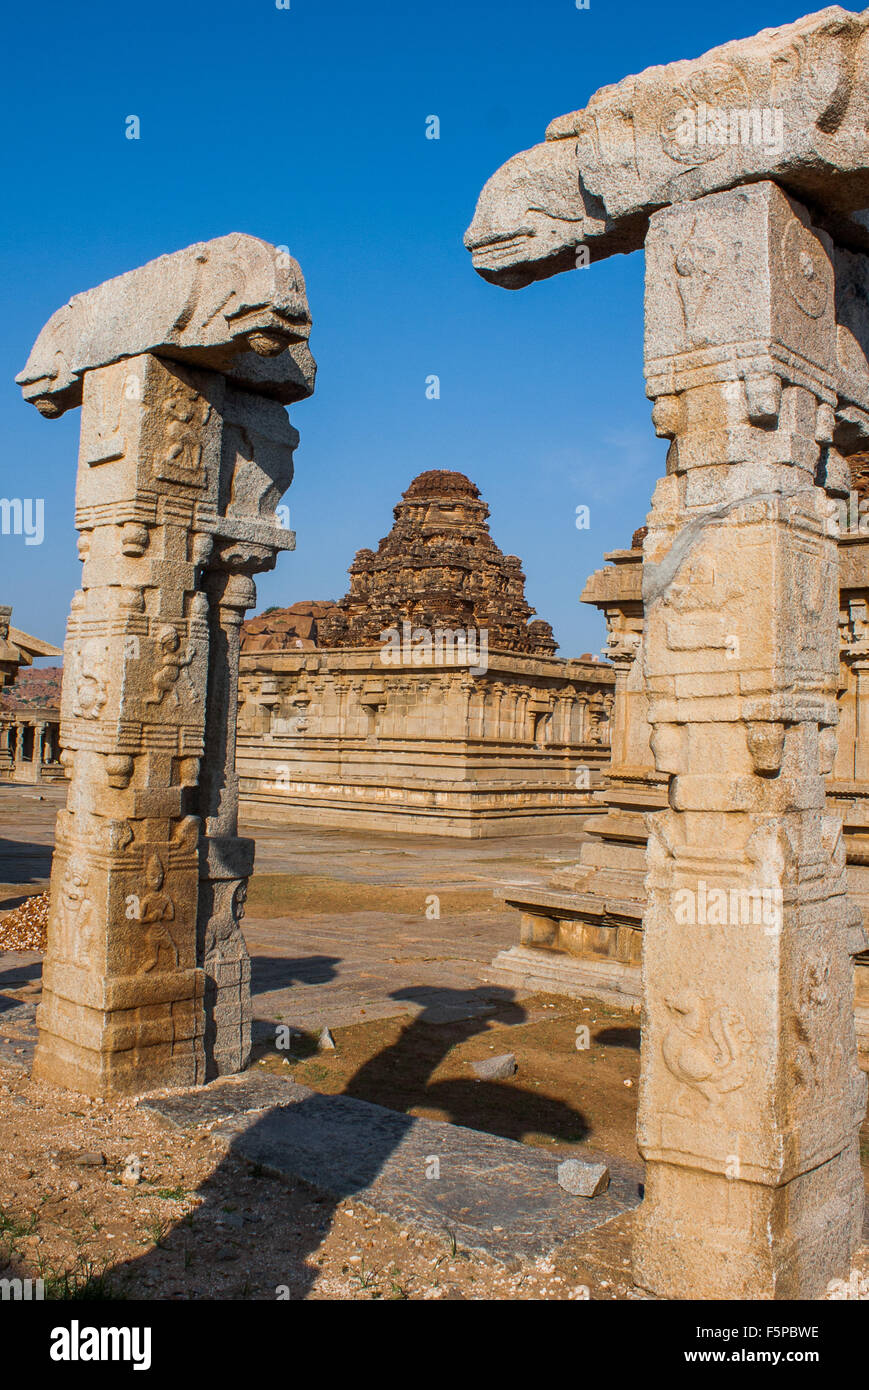 La cúpula del templo en ruinas de Hampi en Karnataka, India Foto de stock